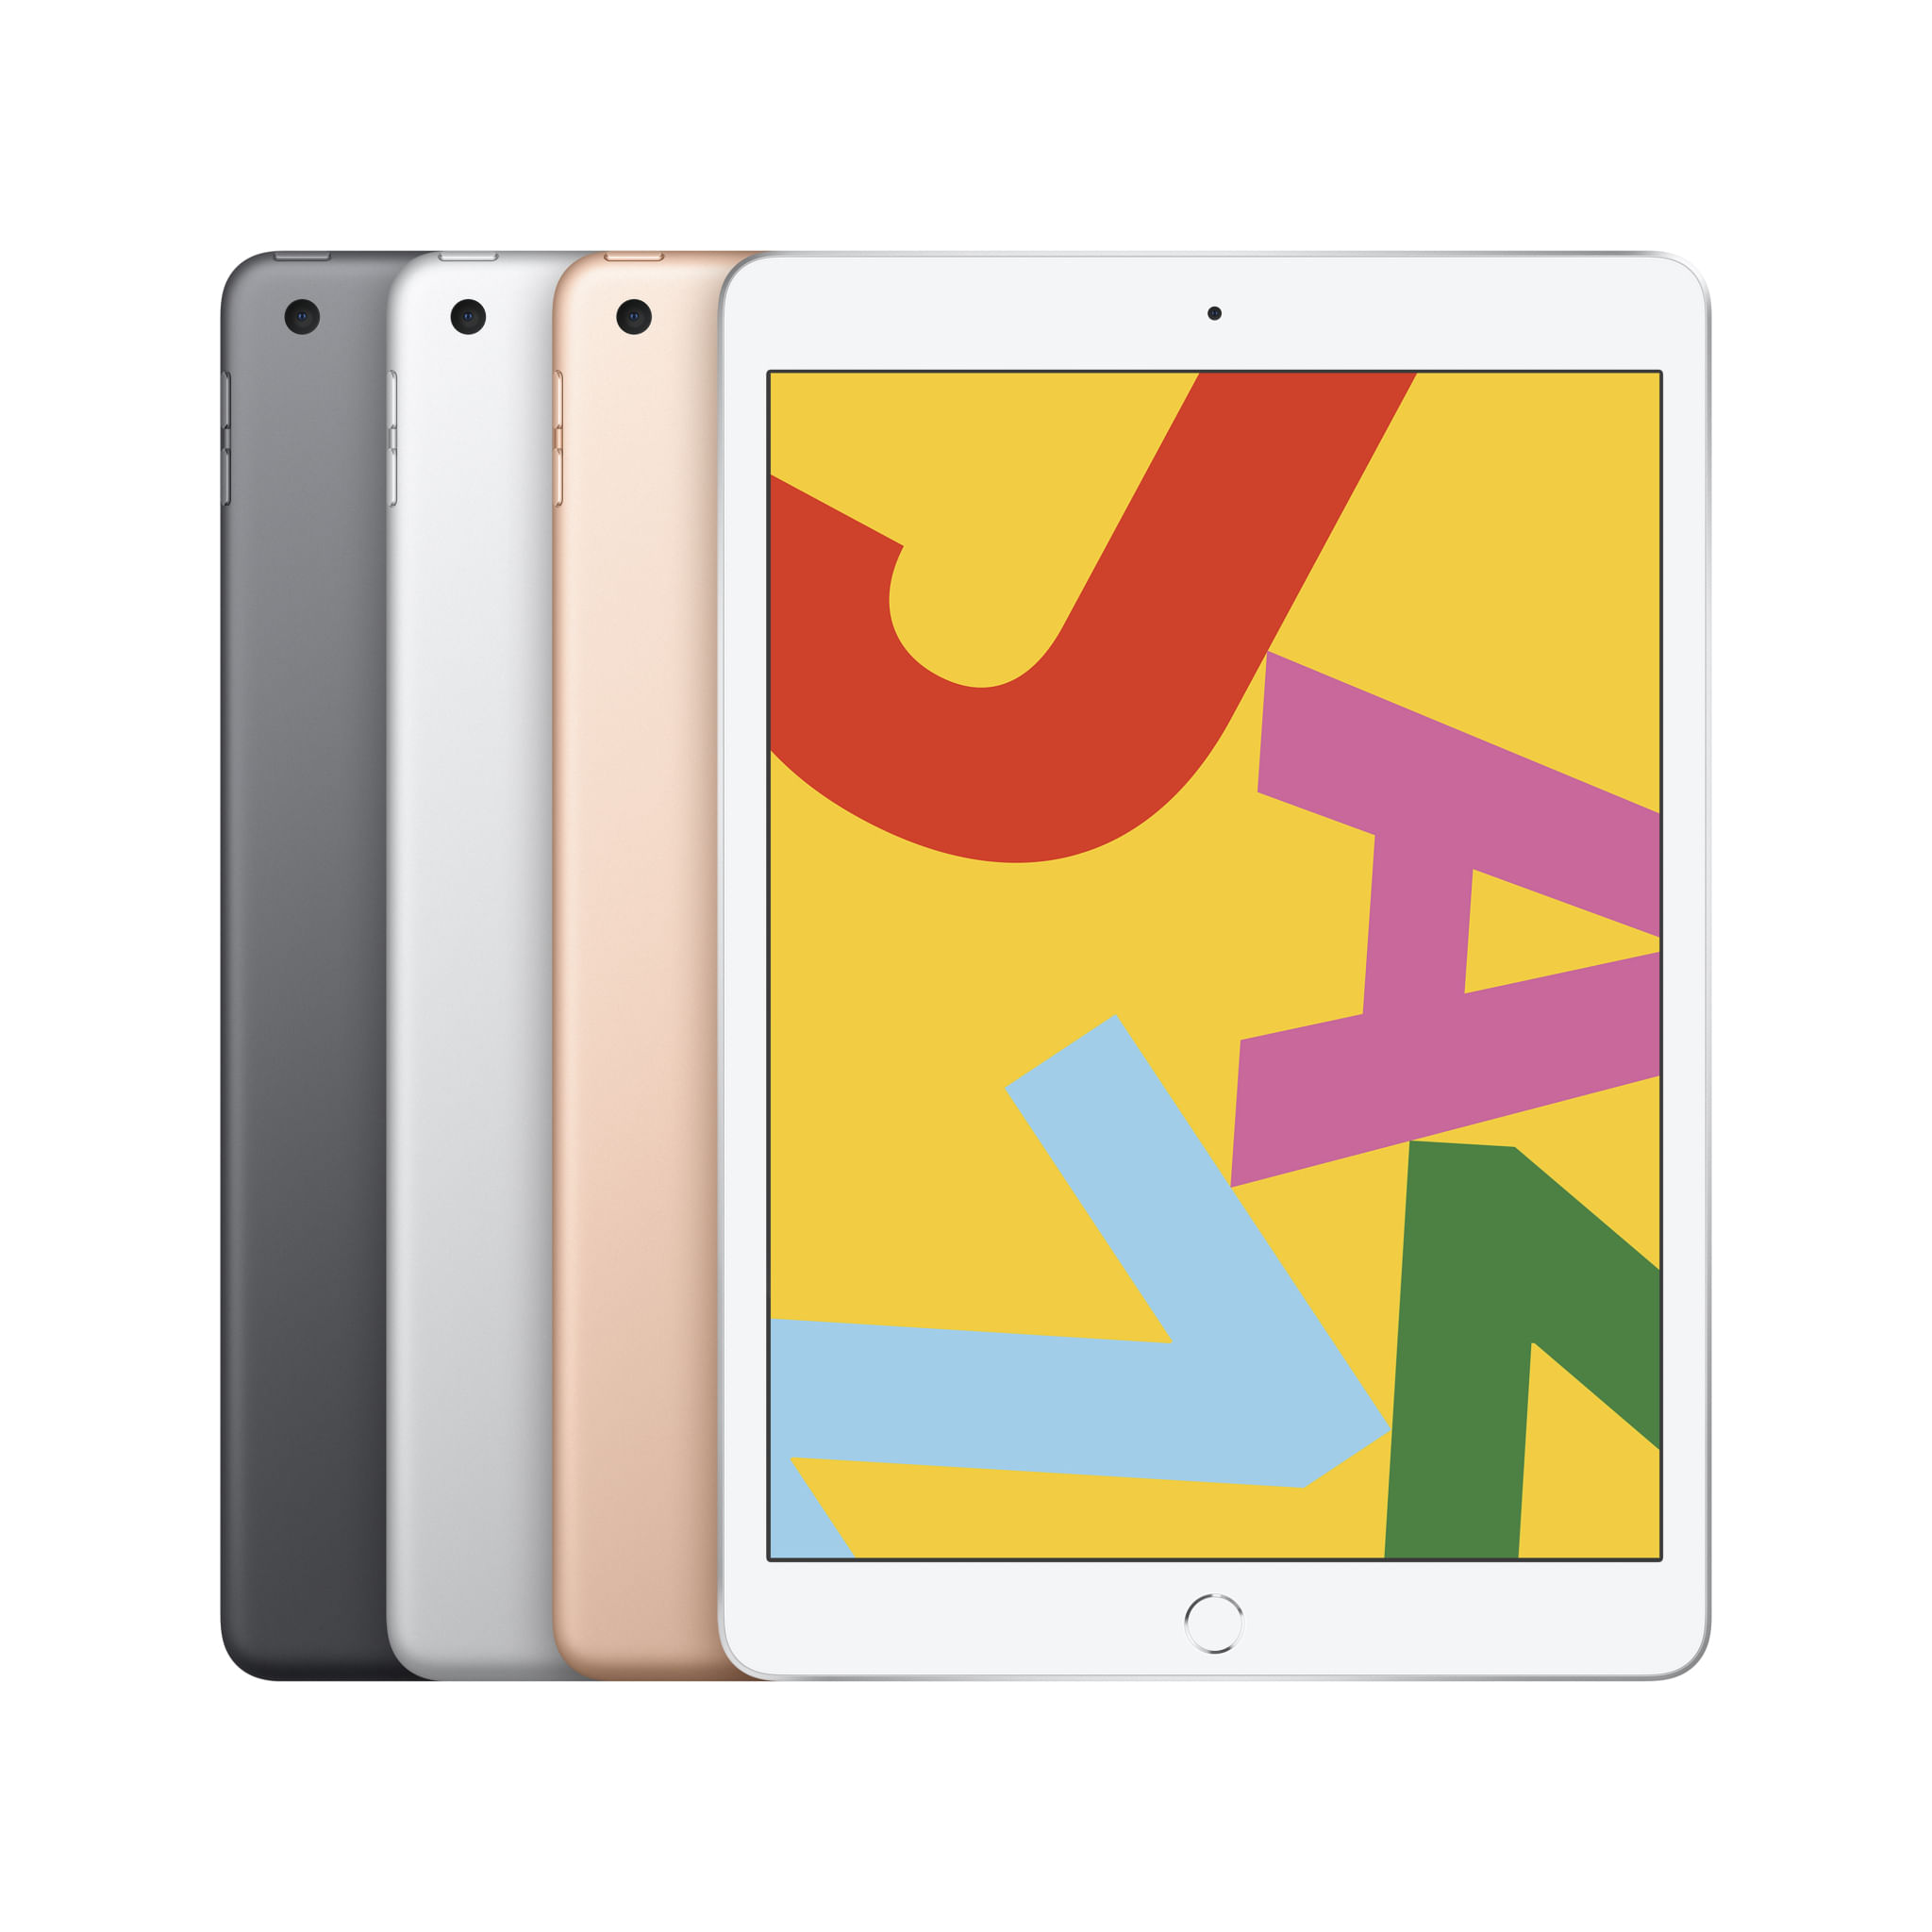 iPad Apple 32GB Cinza Espacial Tela 10,2" Retina - Proc. Chip A10 Câm. 8MP + Frontal 1,2MP iPadOS - 3